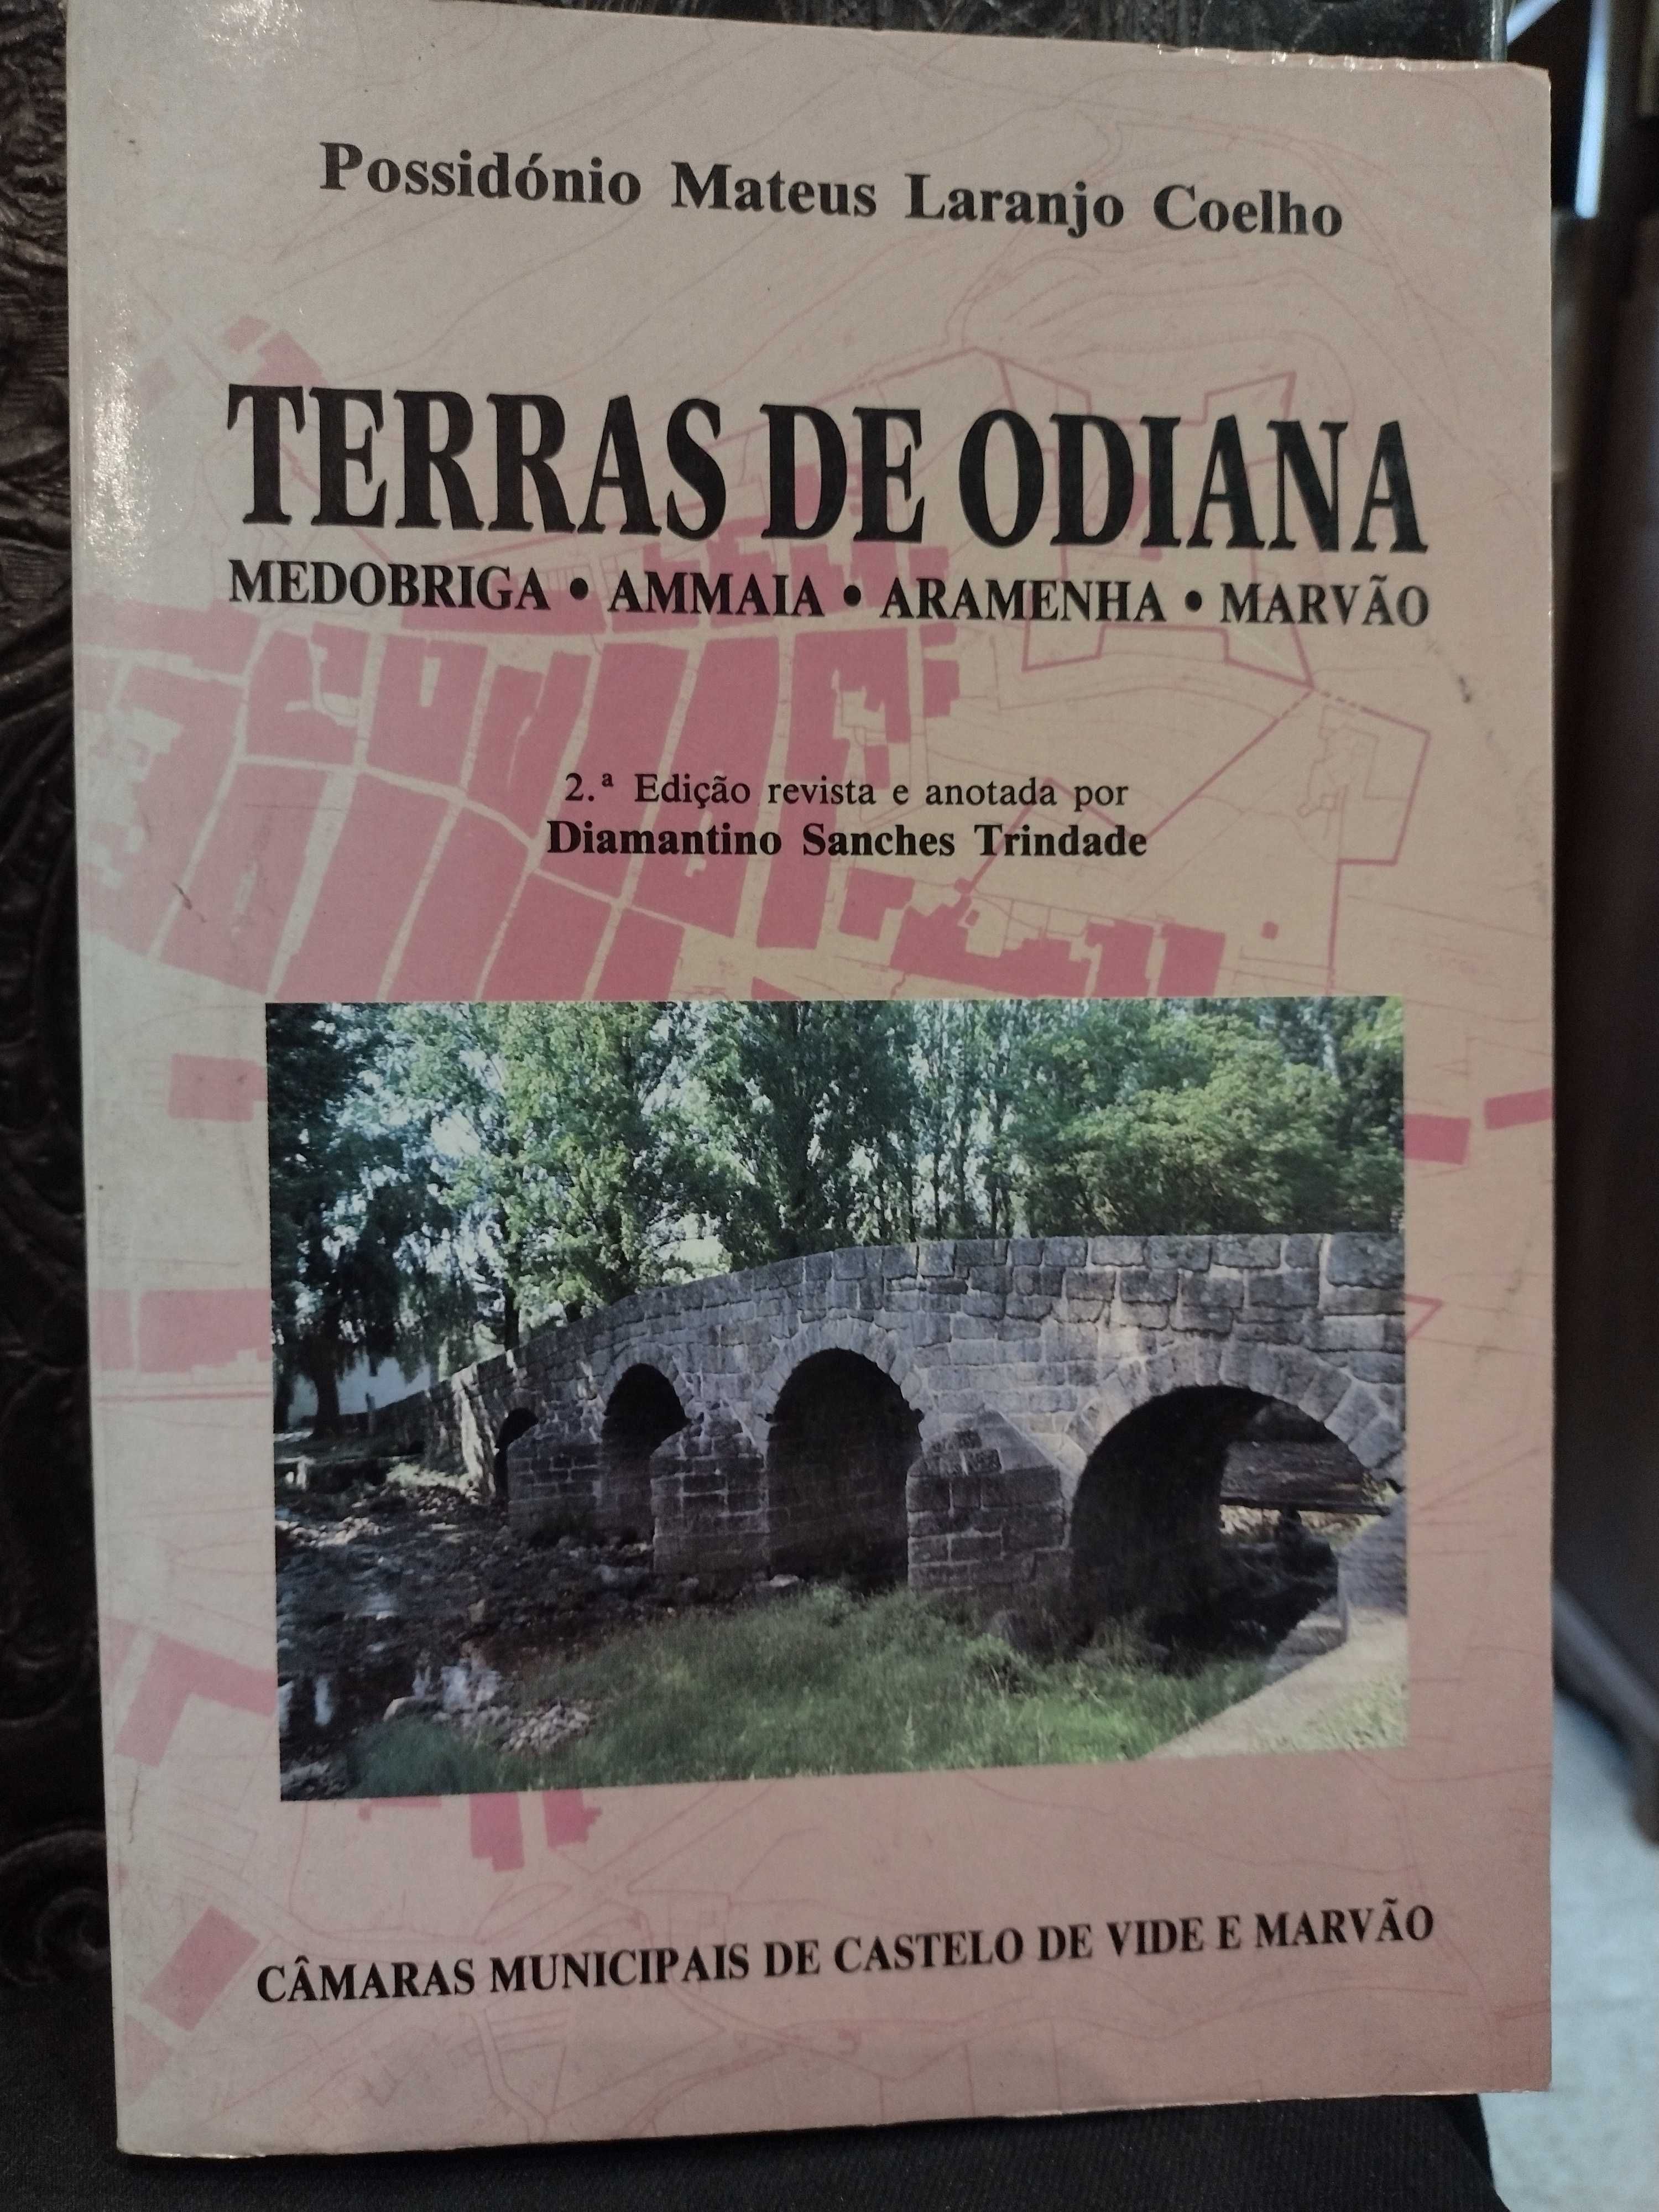 Terras de Odiana - Possidónio Mateus Laranjo Coelho